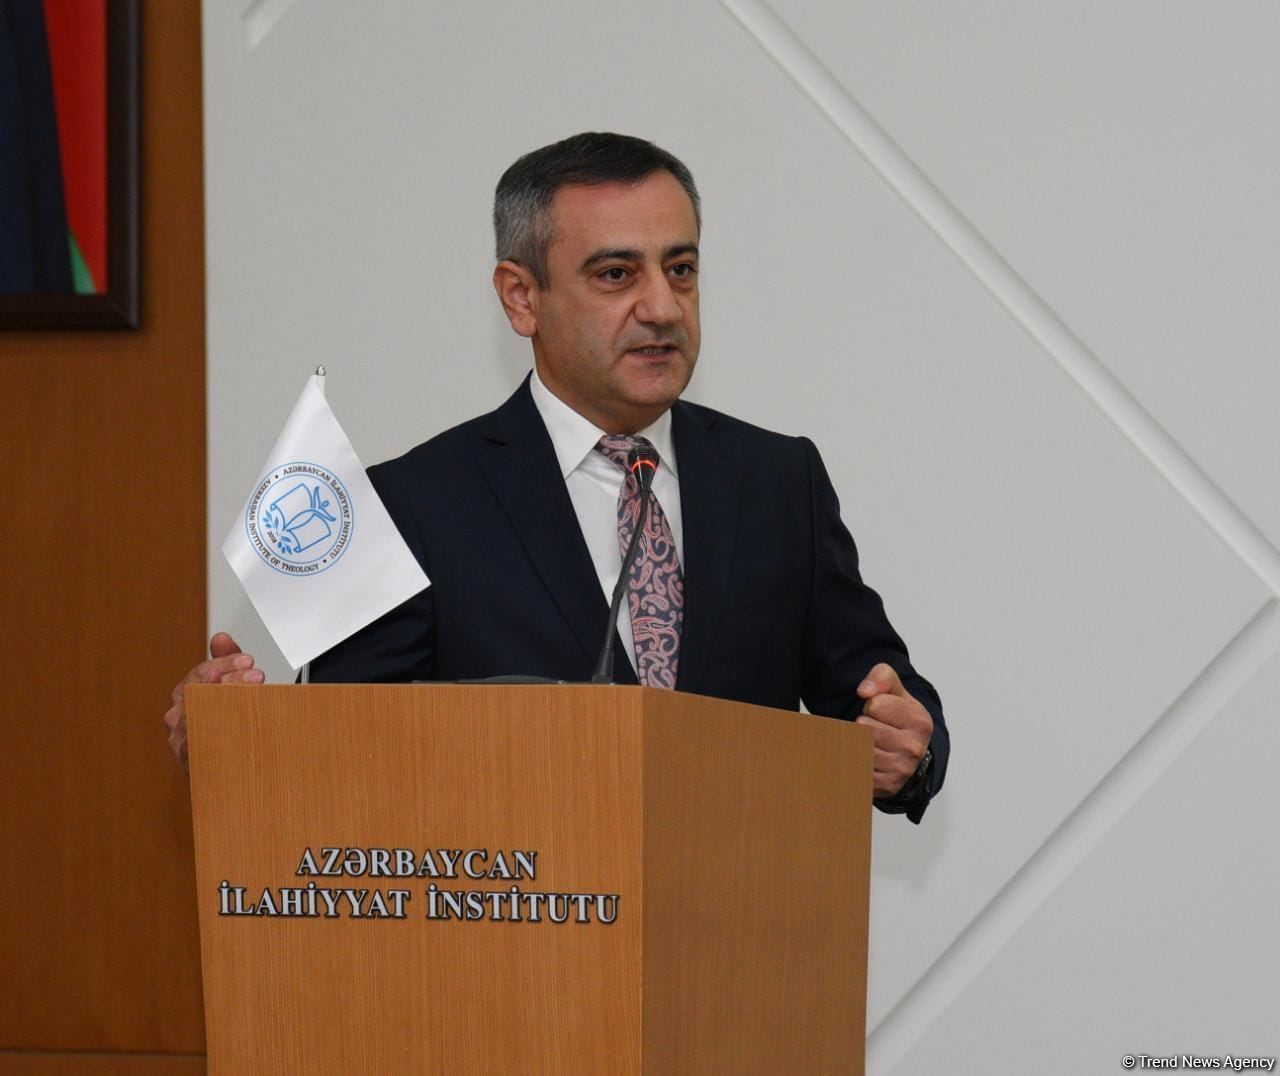 Azerbaijan's media sector aims for new level through ongoing progress - Trend's deputy director